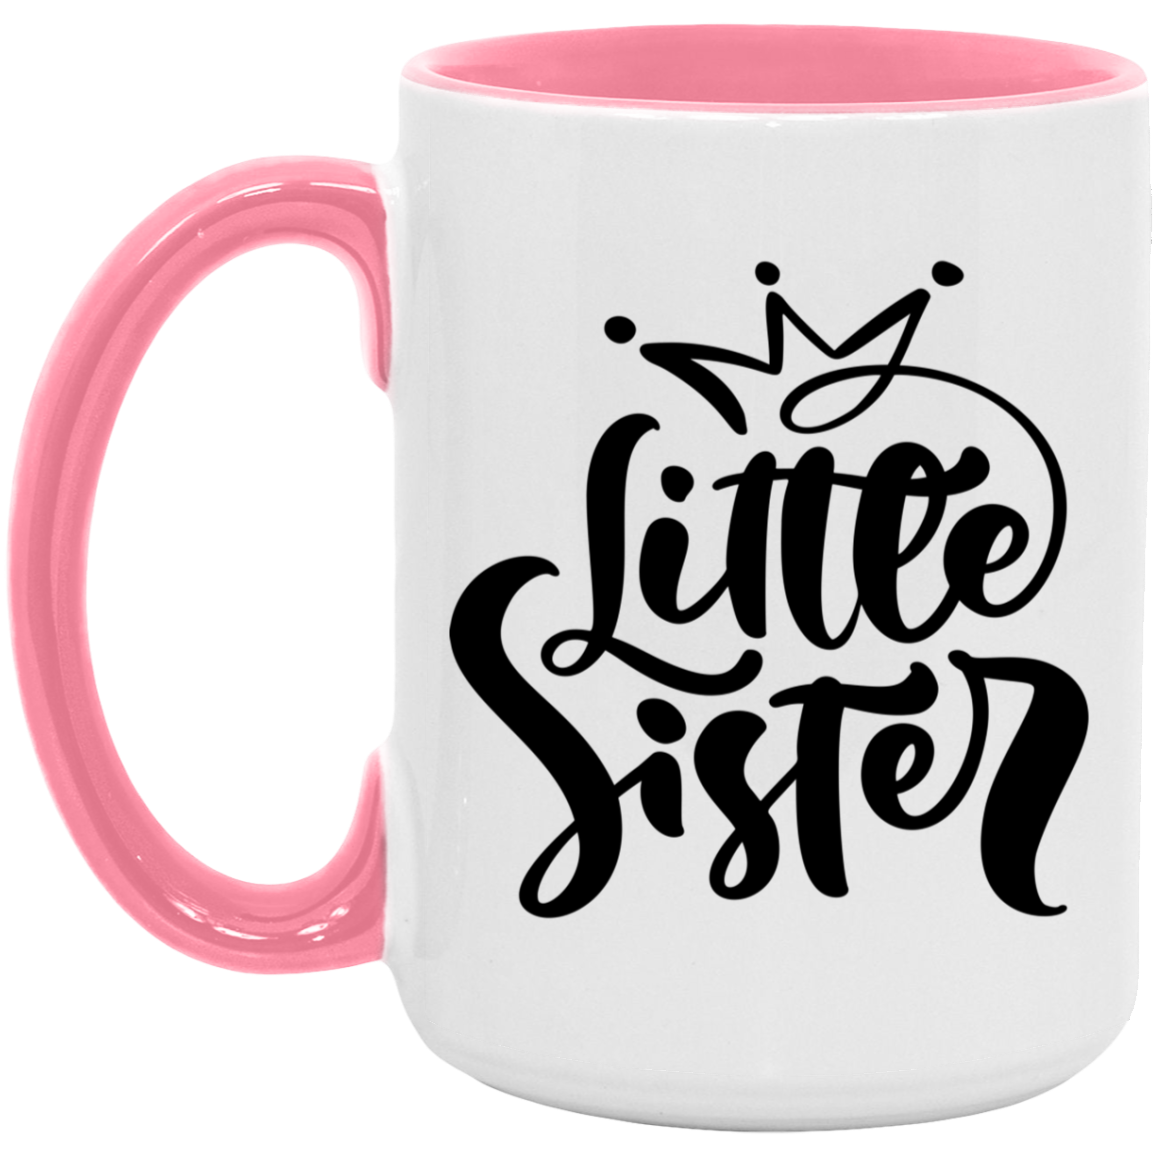 Little Sister Crown Mug